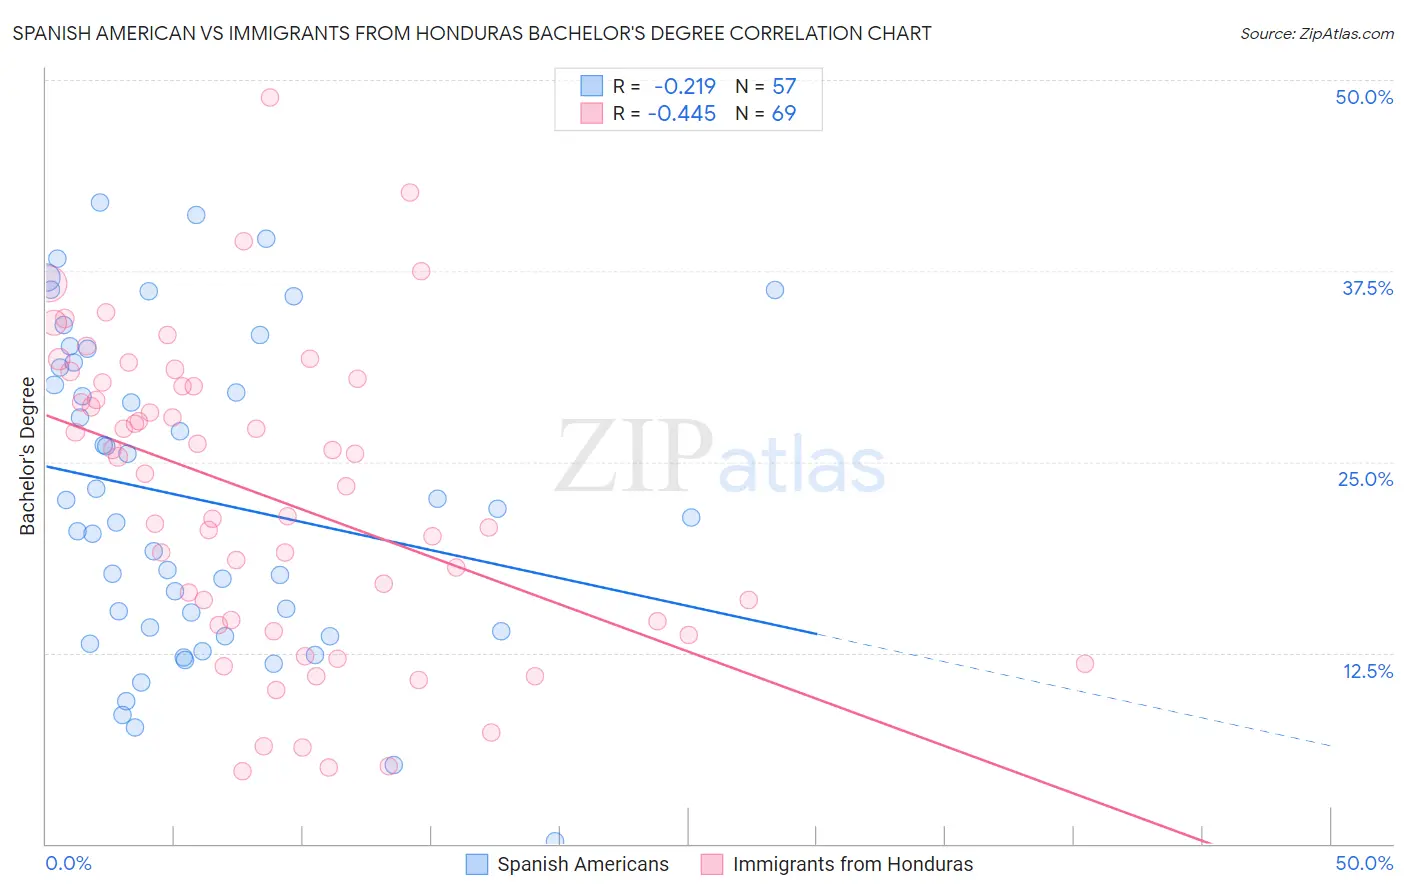 Spanish American vs Immigrants from Honduras Bachelor's Degree